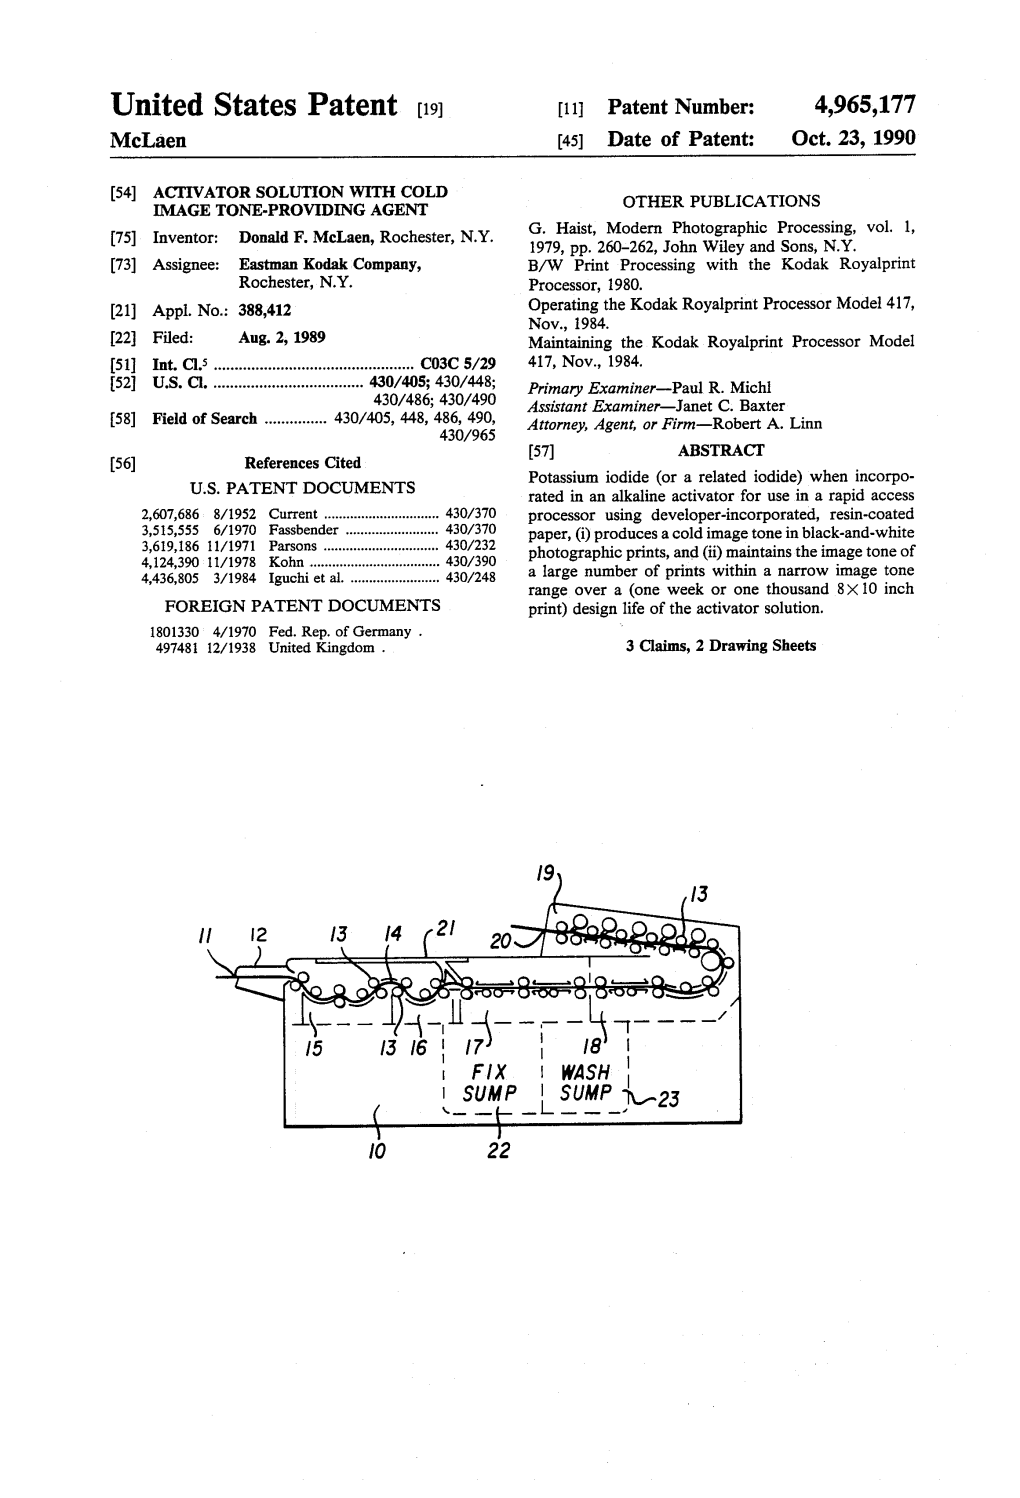 United States Patent (19) 11 Patent Number: 4,965,177 Mclaen (45) Date of Patent: Oct